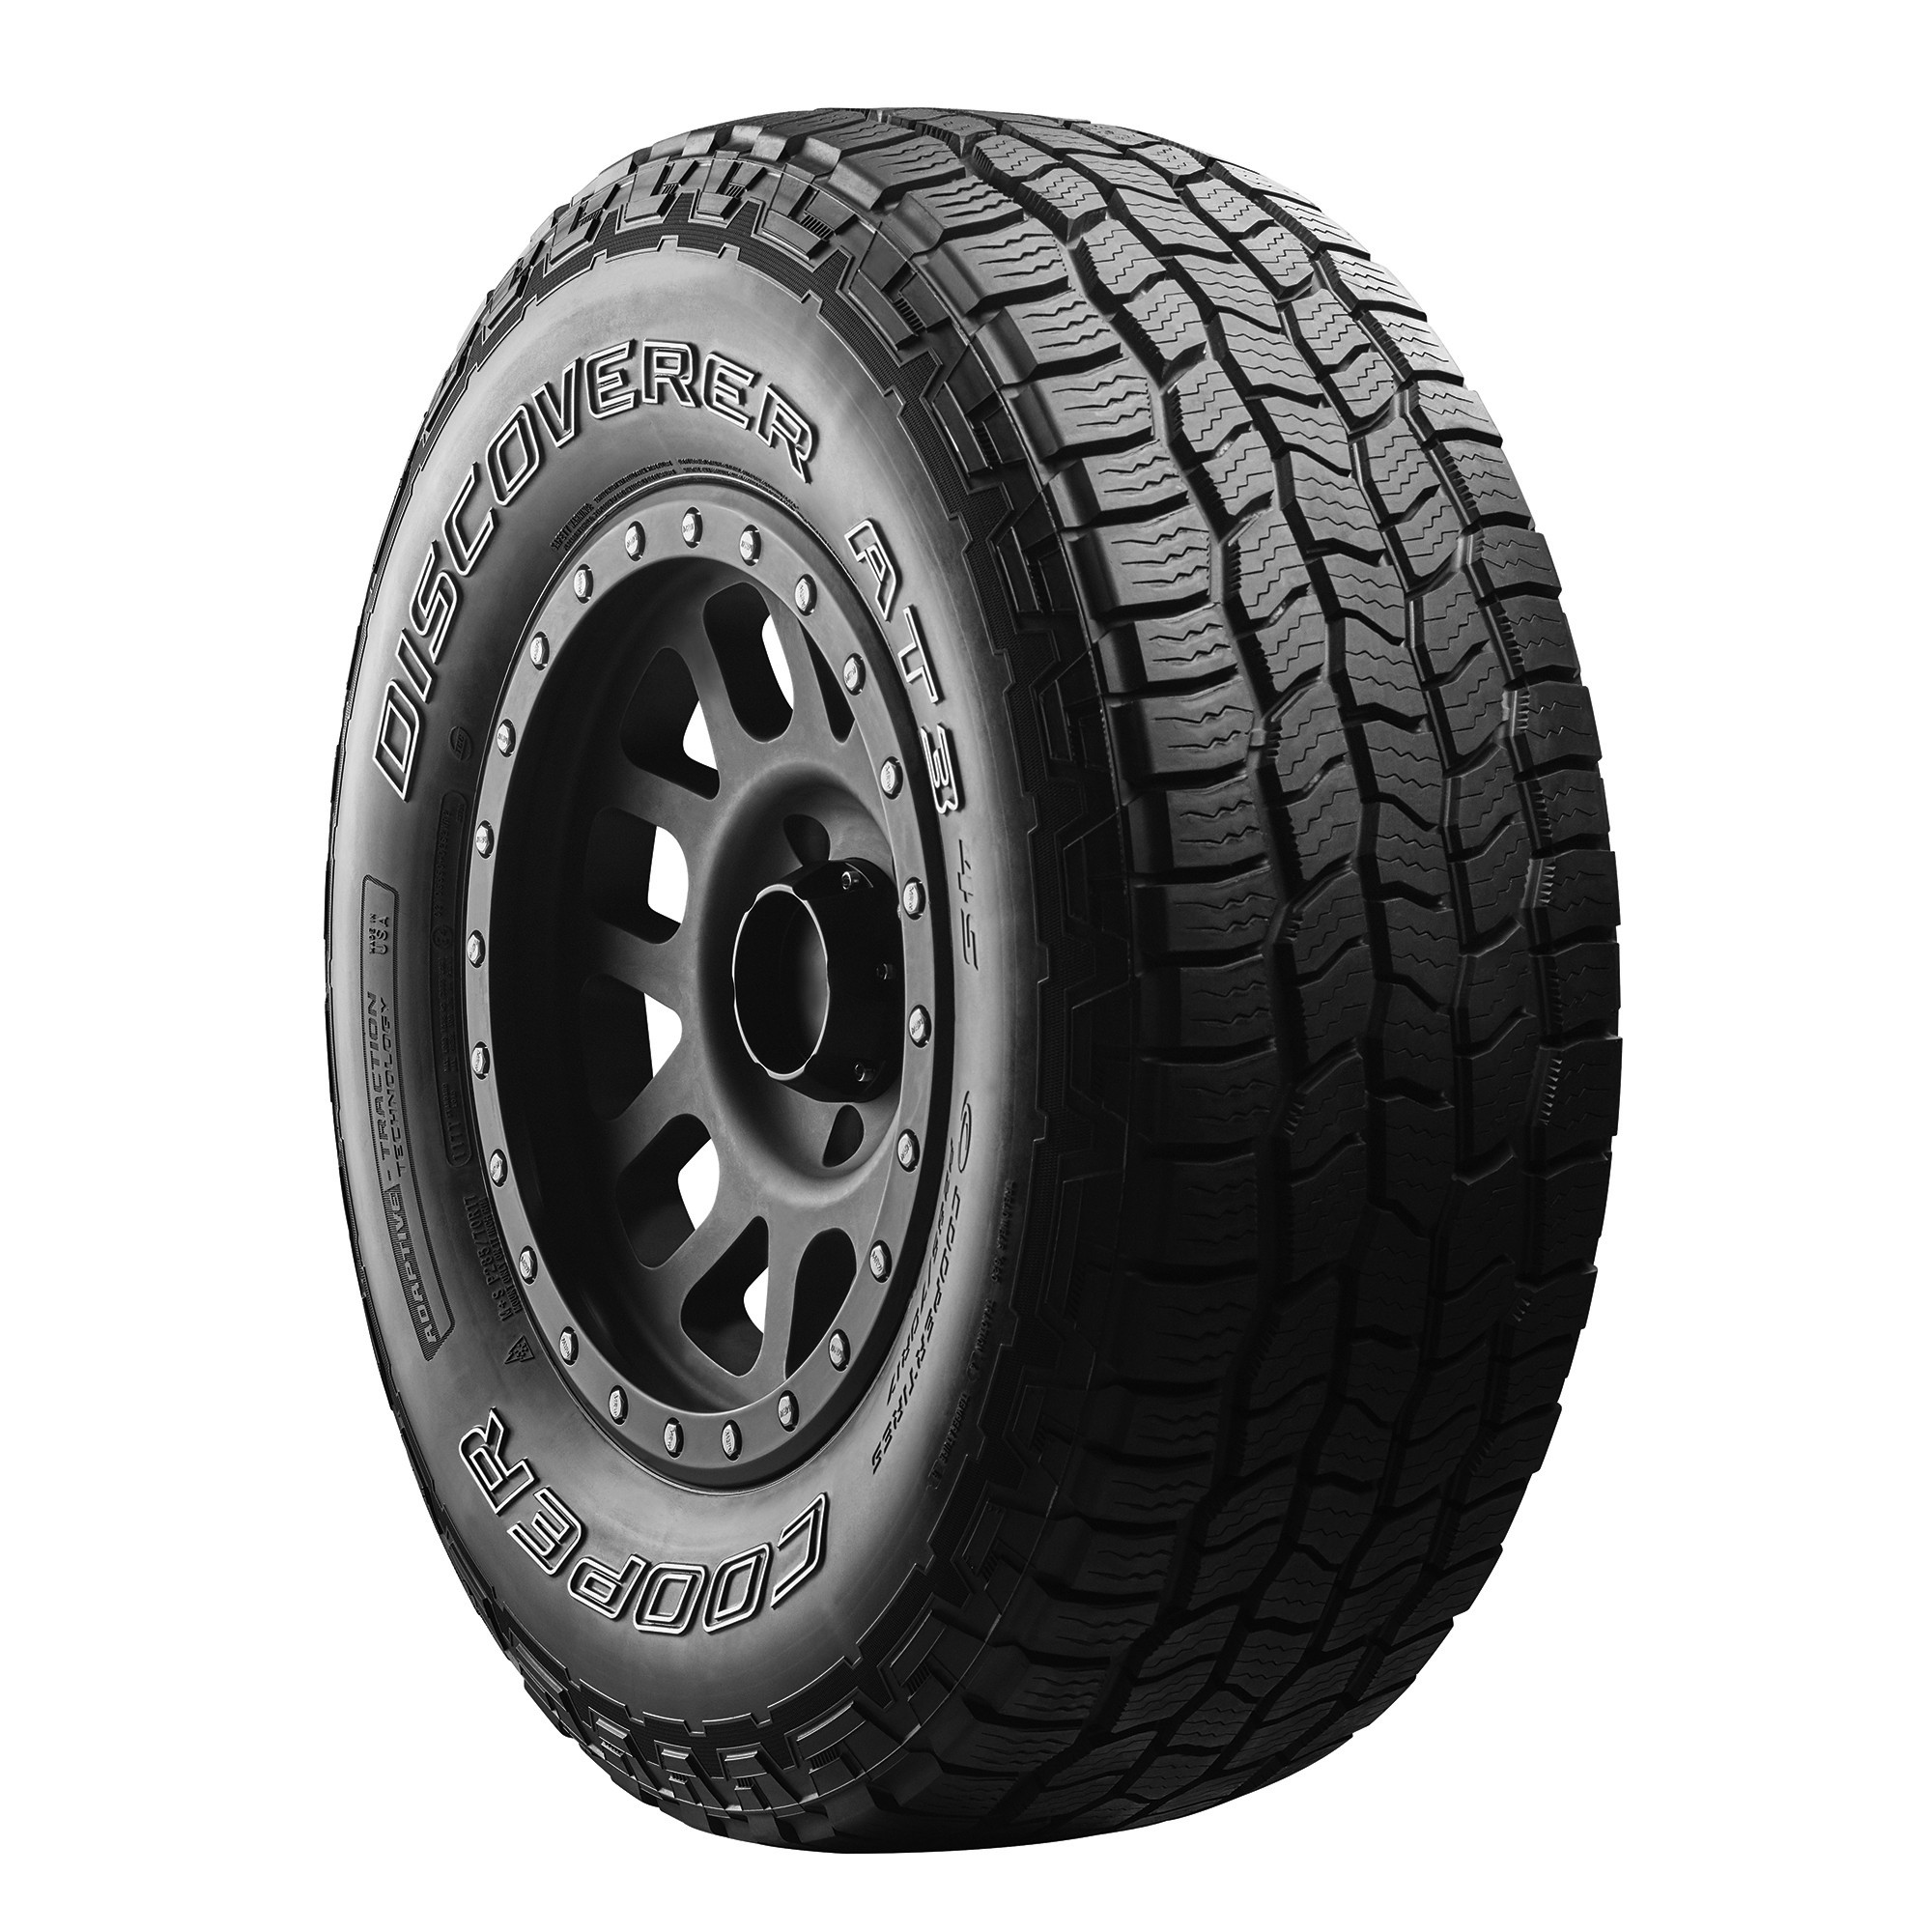 cooper-discoverer-at3-4s-tyres-available-online-john-craddock-ltd